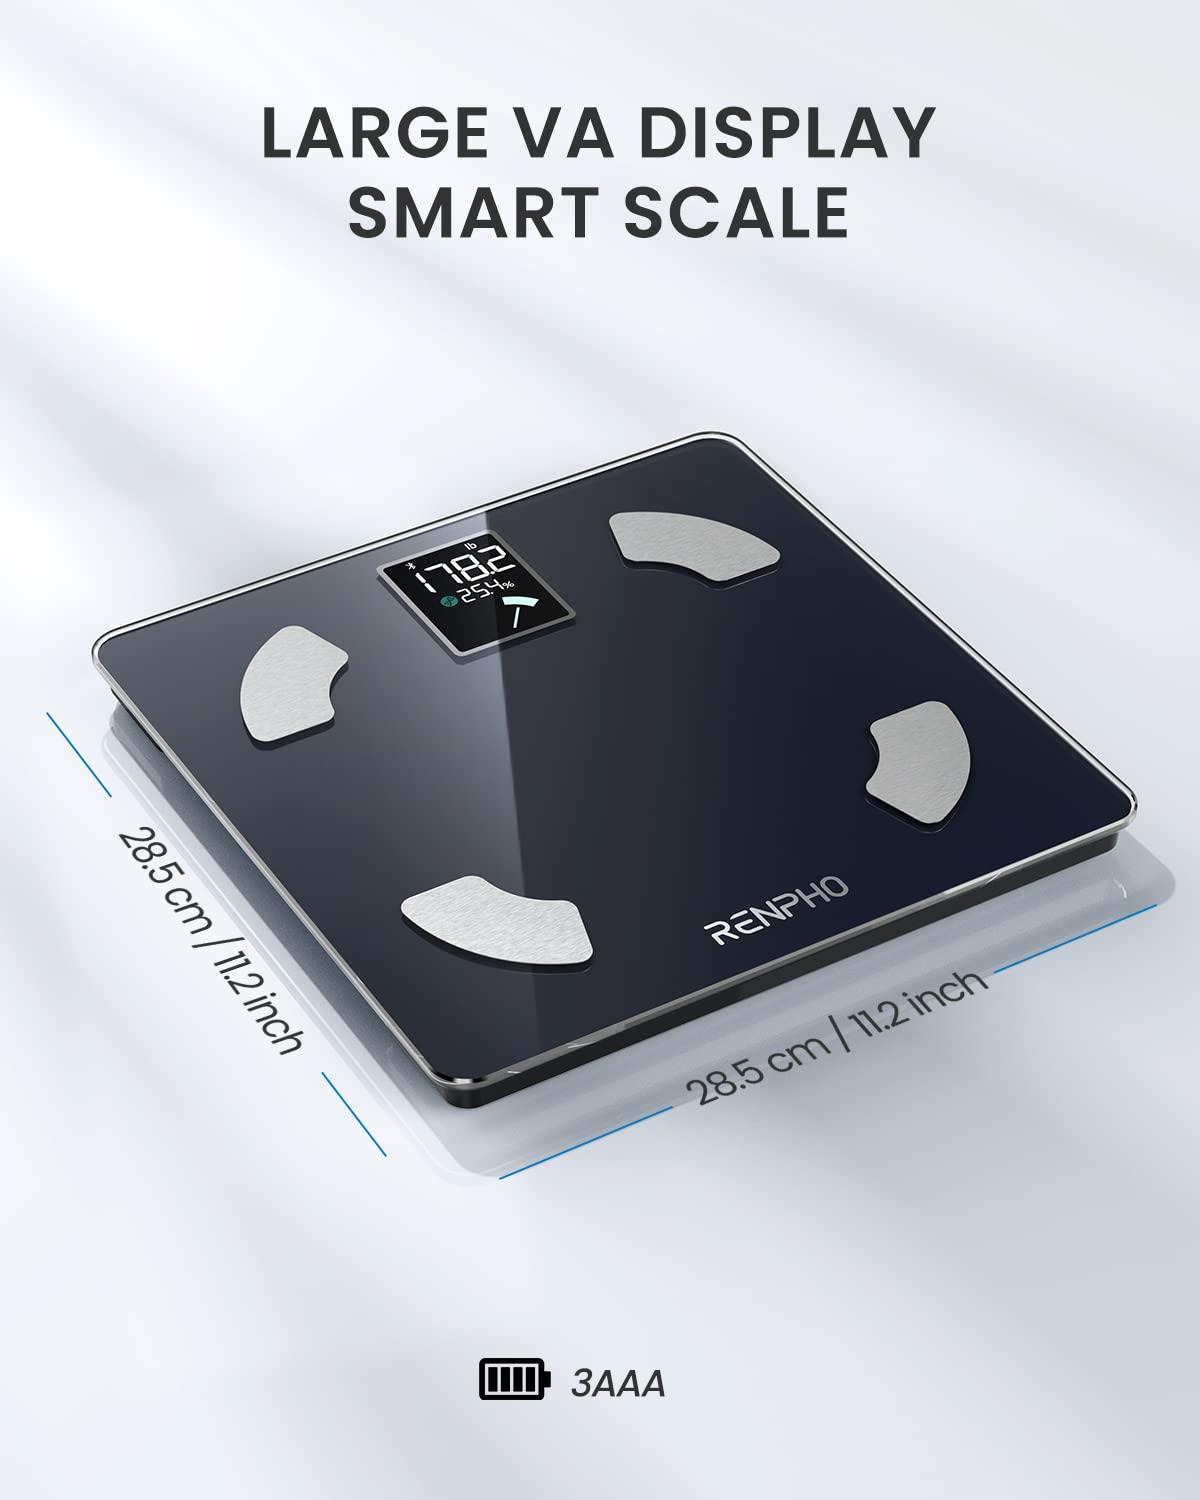 RENPHO Body Fat Scale Weight Bathroom Smart Digital Bluetooth